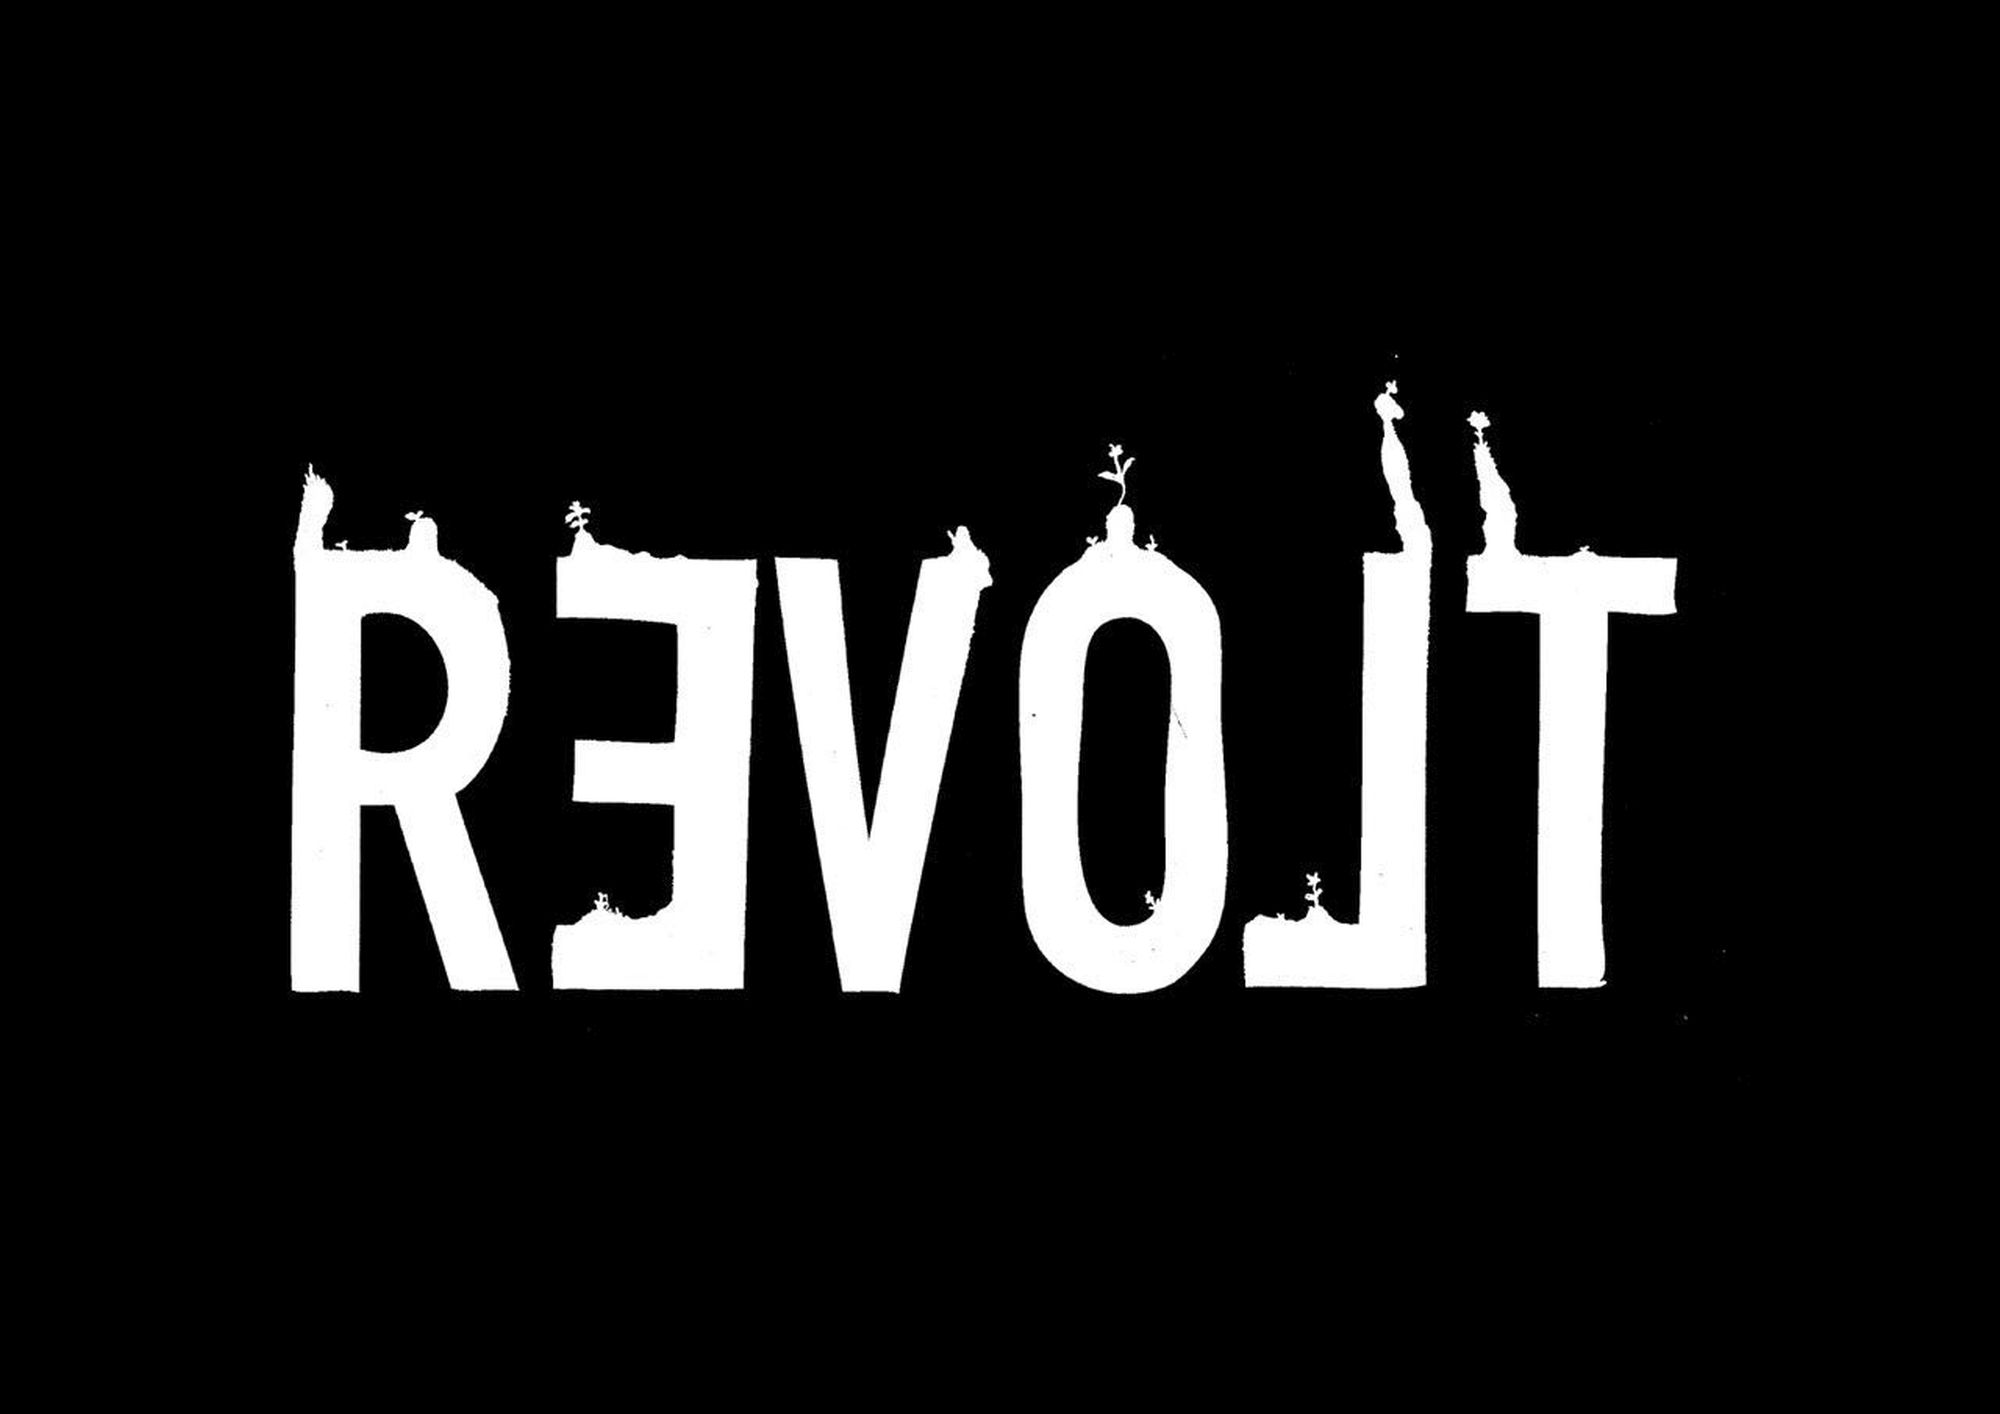 images/archief/revolt/logo-revolt-zw.jpg#joomlaImage://local-images/archief/revolt/logo-revolt-zw.jpg?width=2000&height=1414